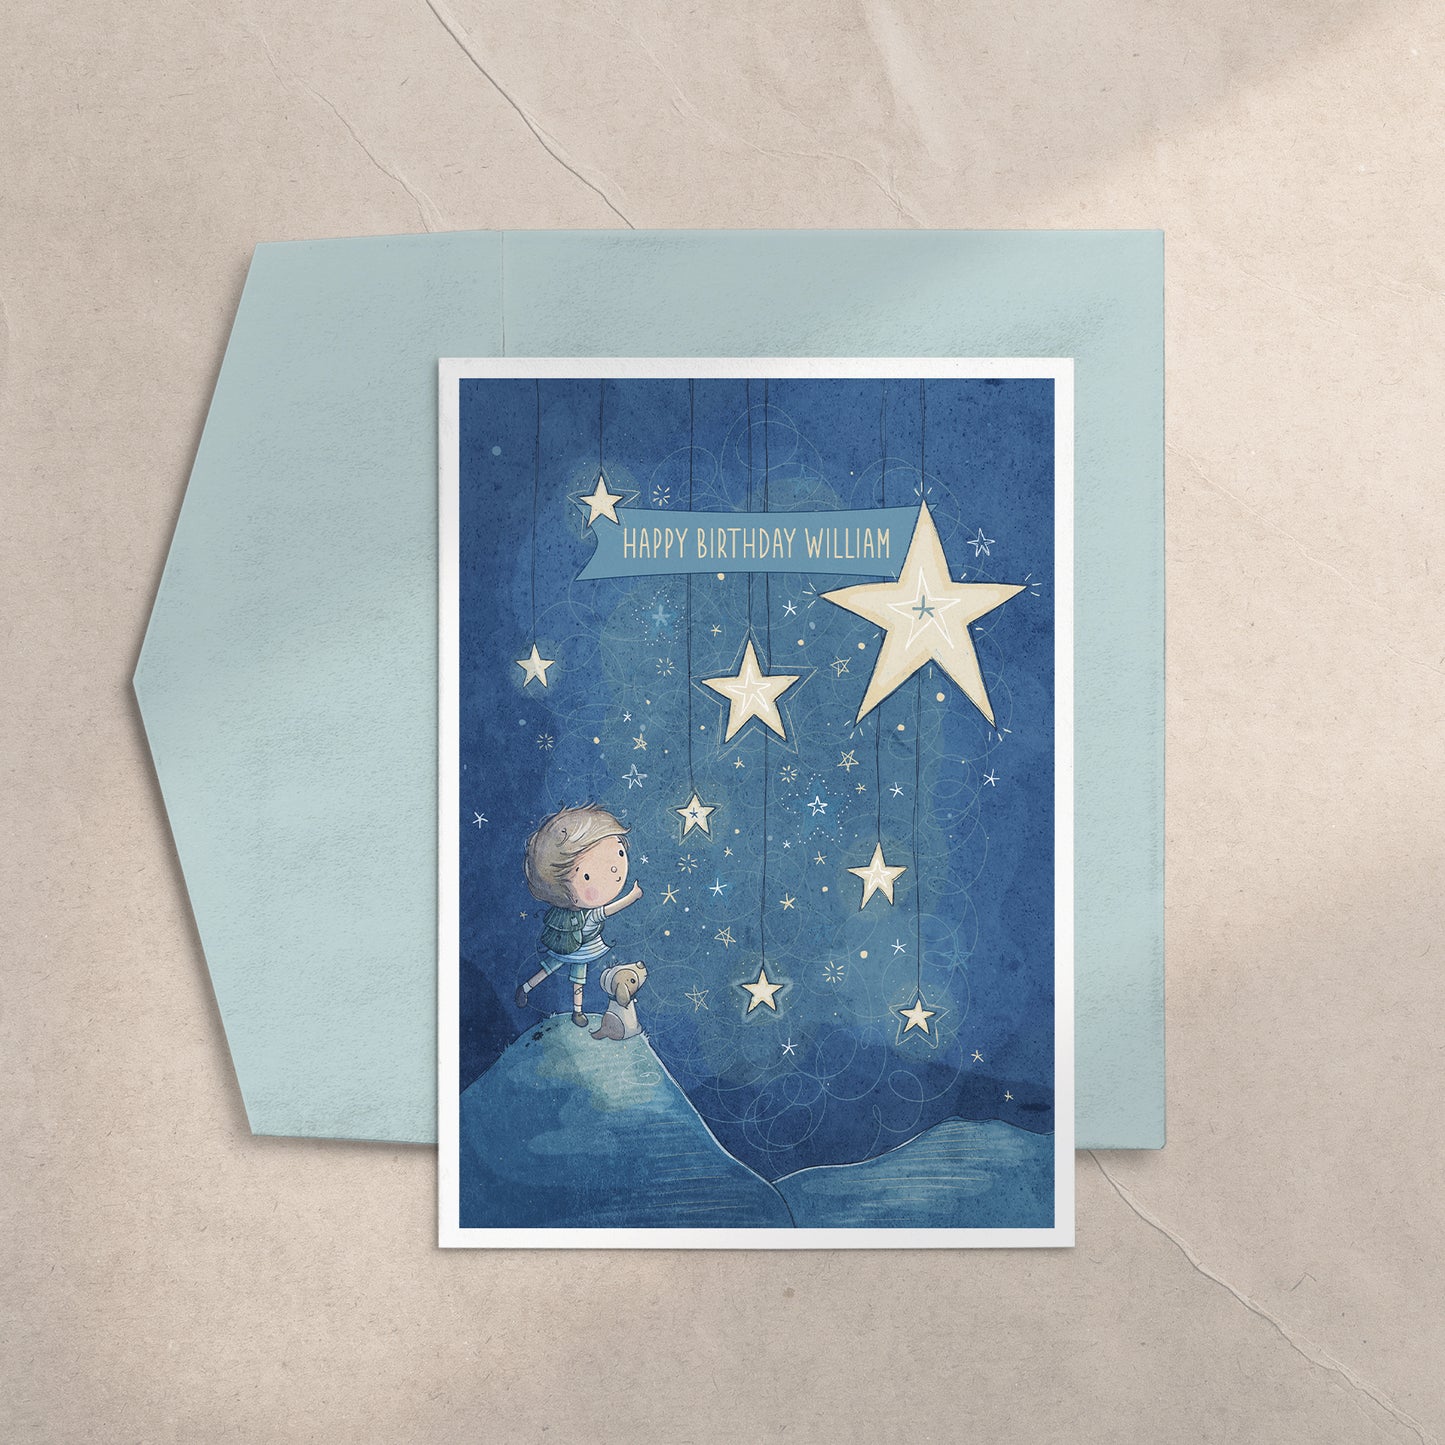 Make a Wish 5x7 Greeting Card